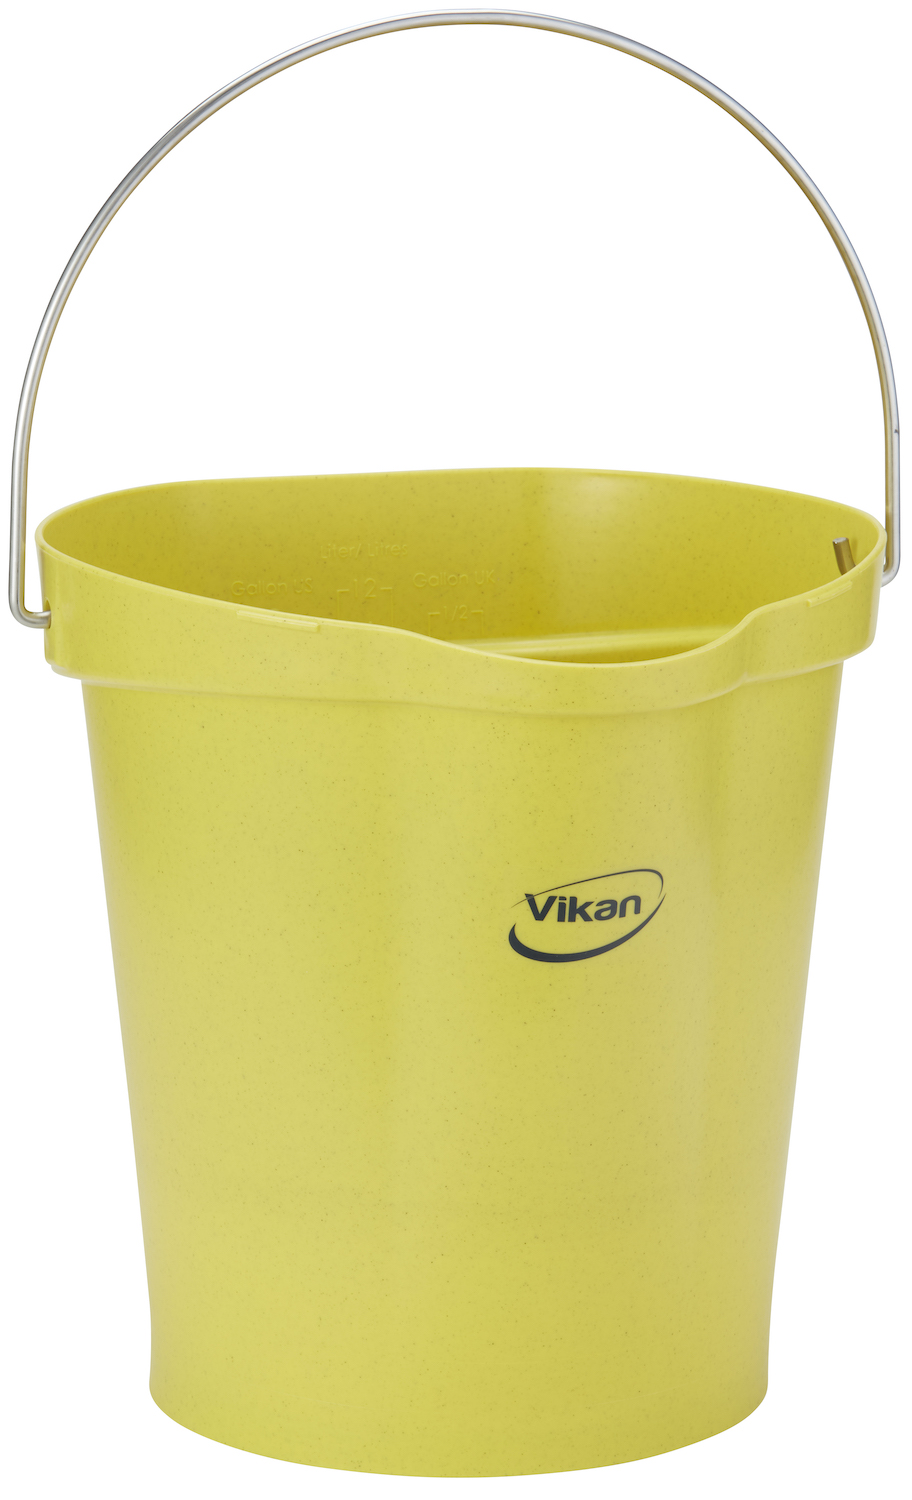 Vikan Bucket, Metal Detectable, 12 Litre, Yellow